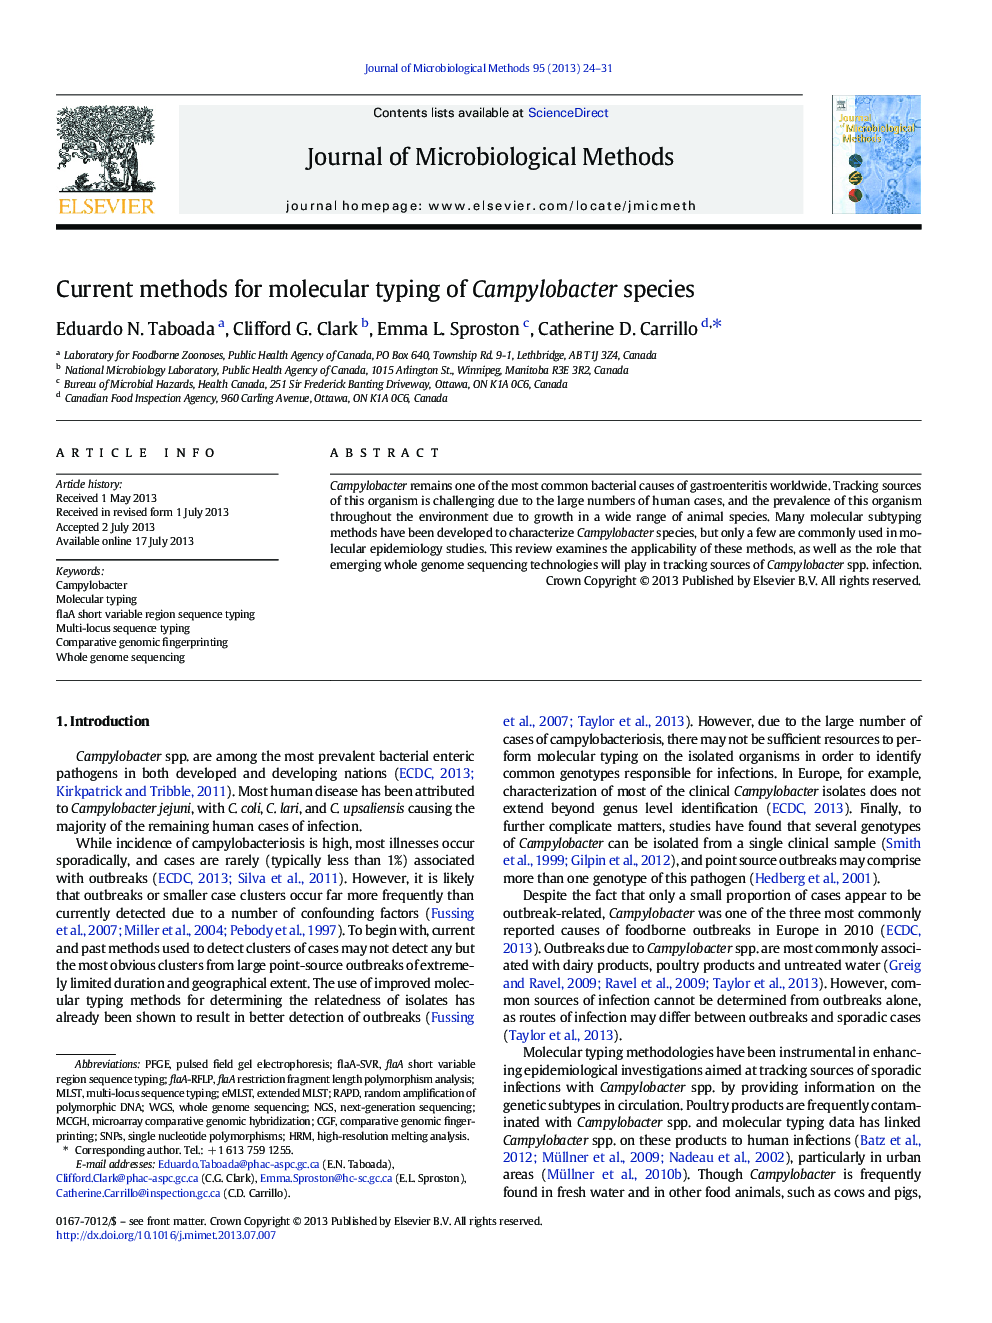 Current methods for molecular typing of Campylobacter species